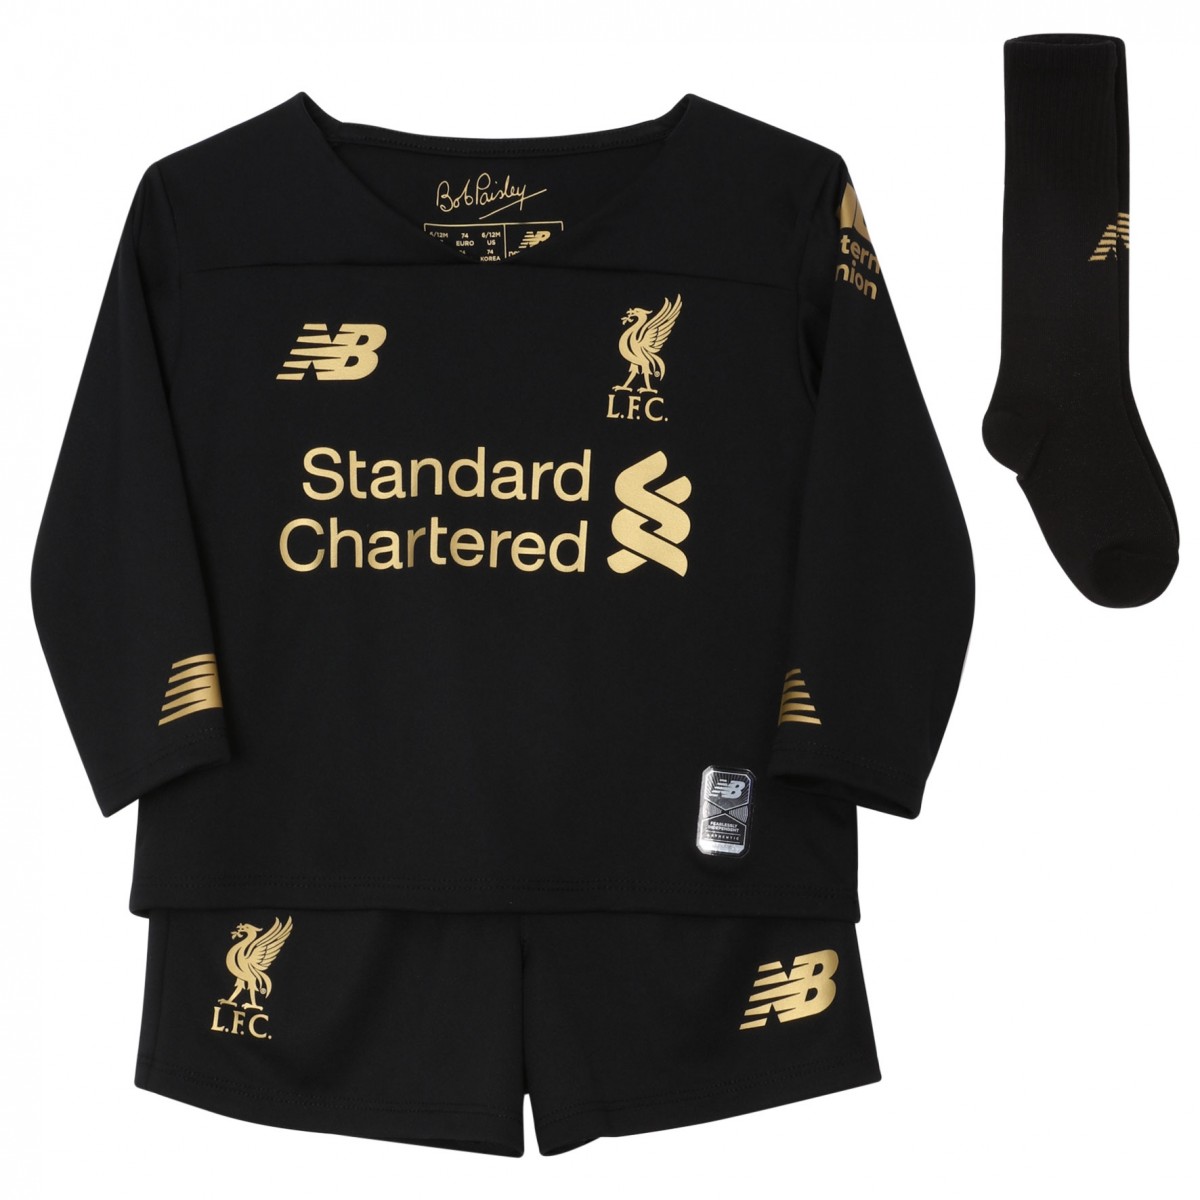 goalkeeper mini kit